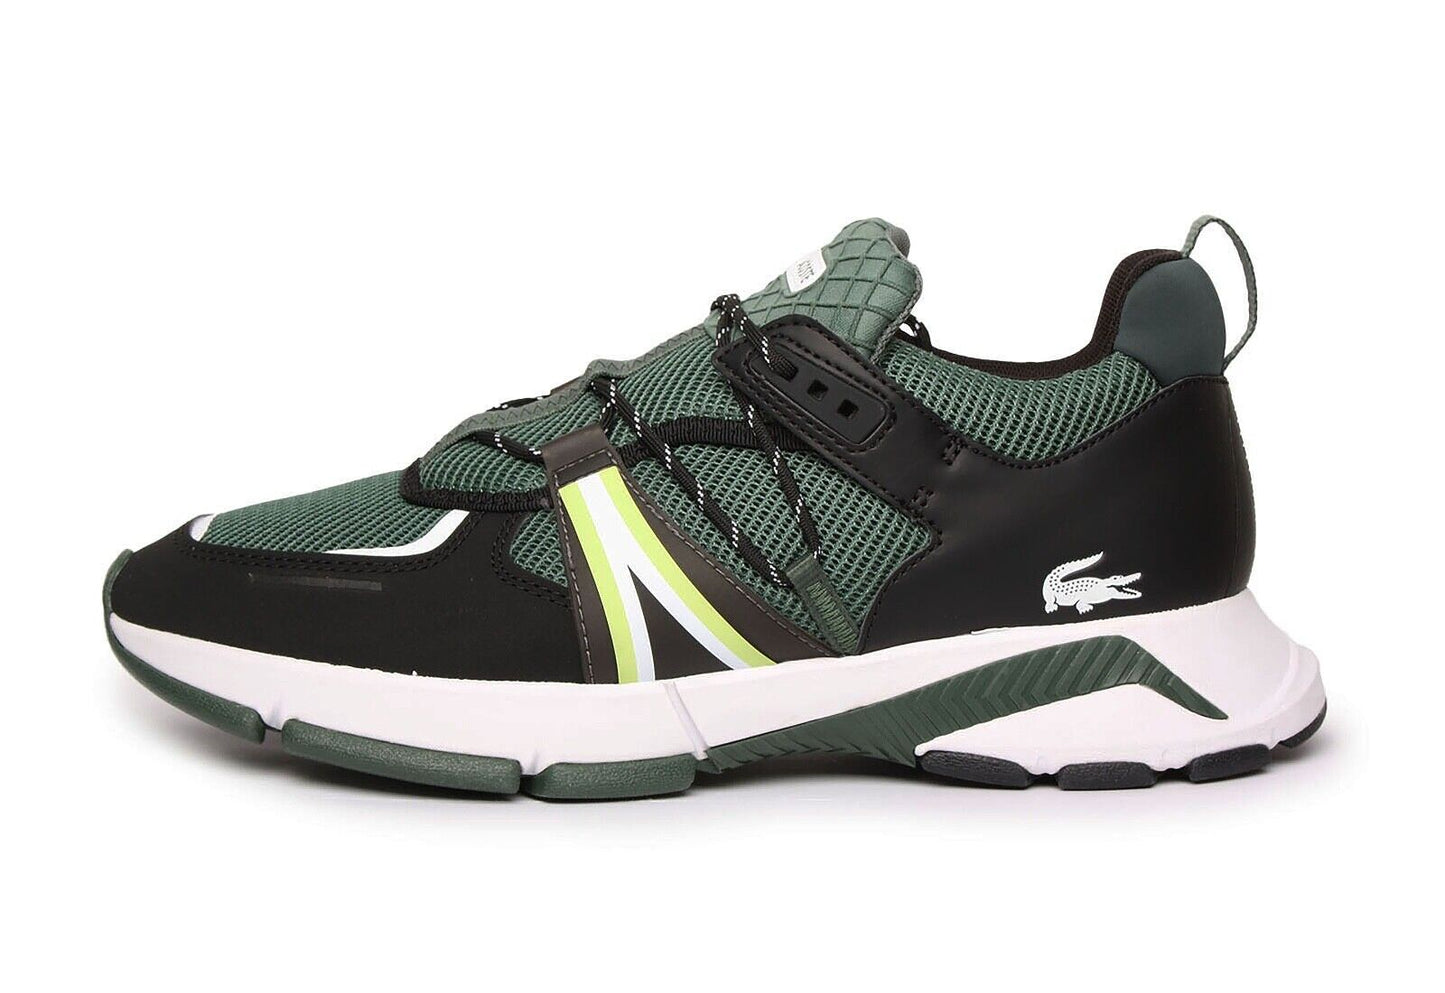 Lacoste L003 223 1 SMA Men’s Sneakers in Green and Black 746SMA0002GB1